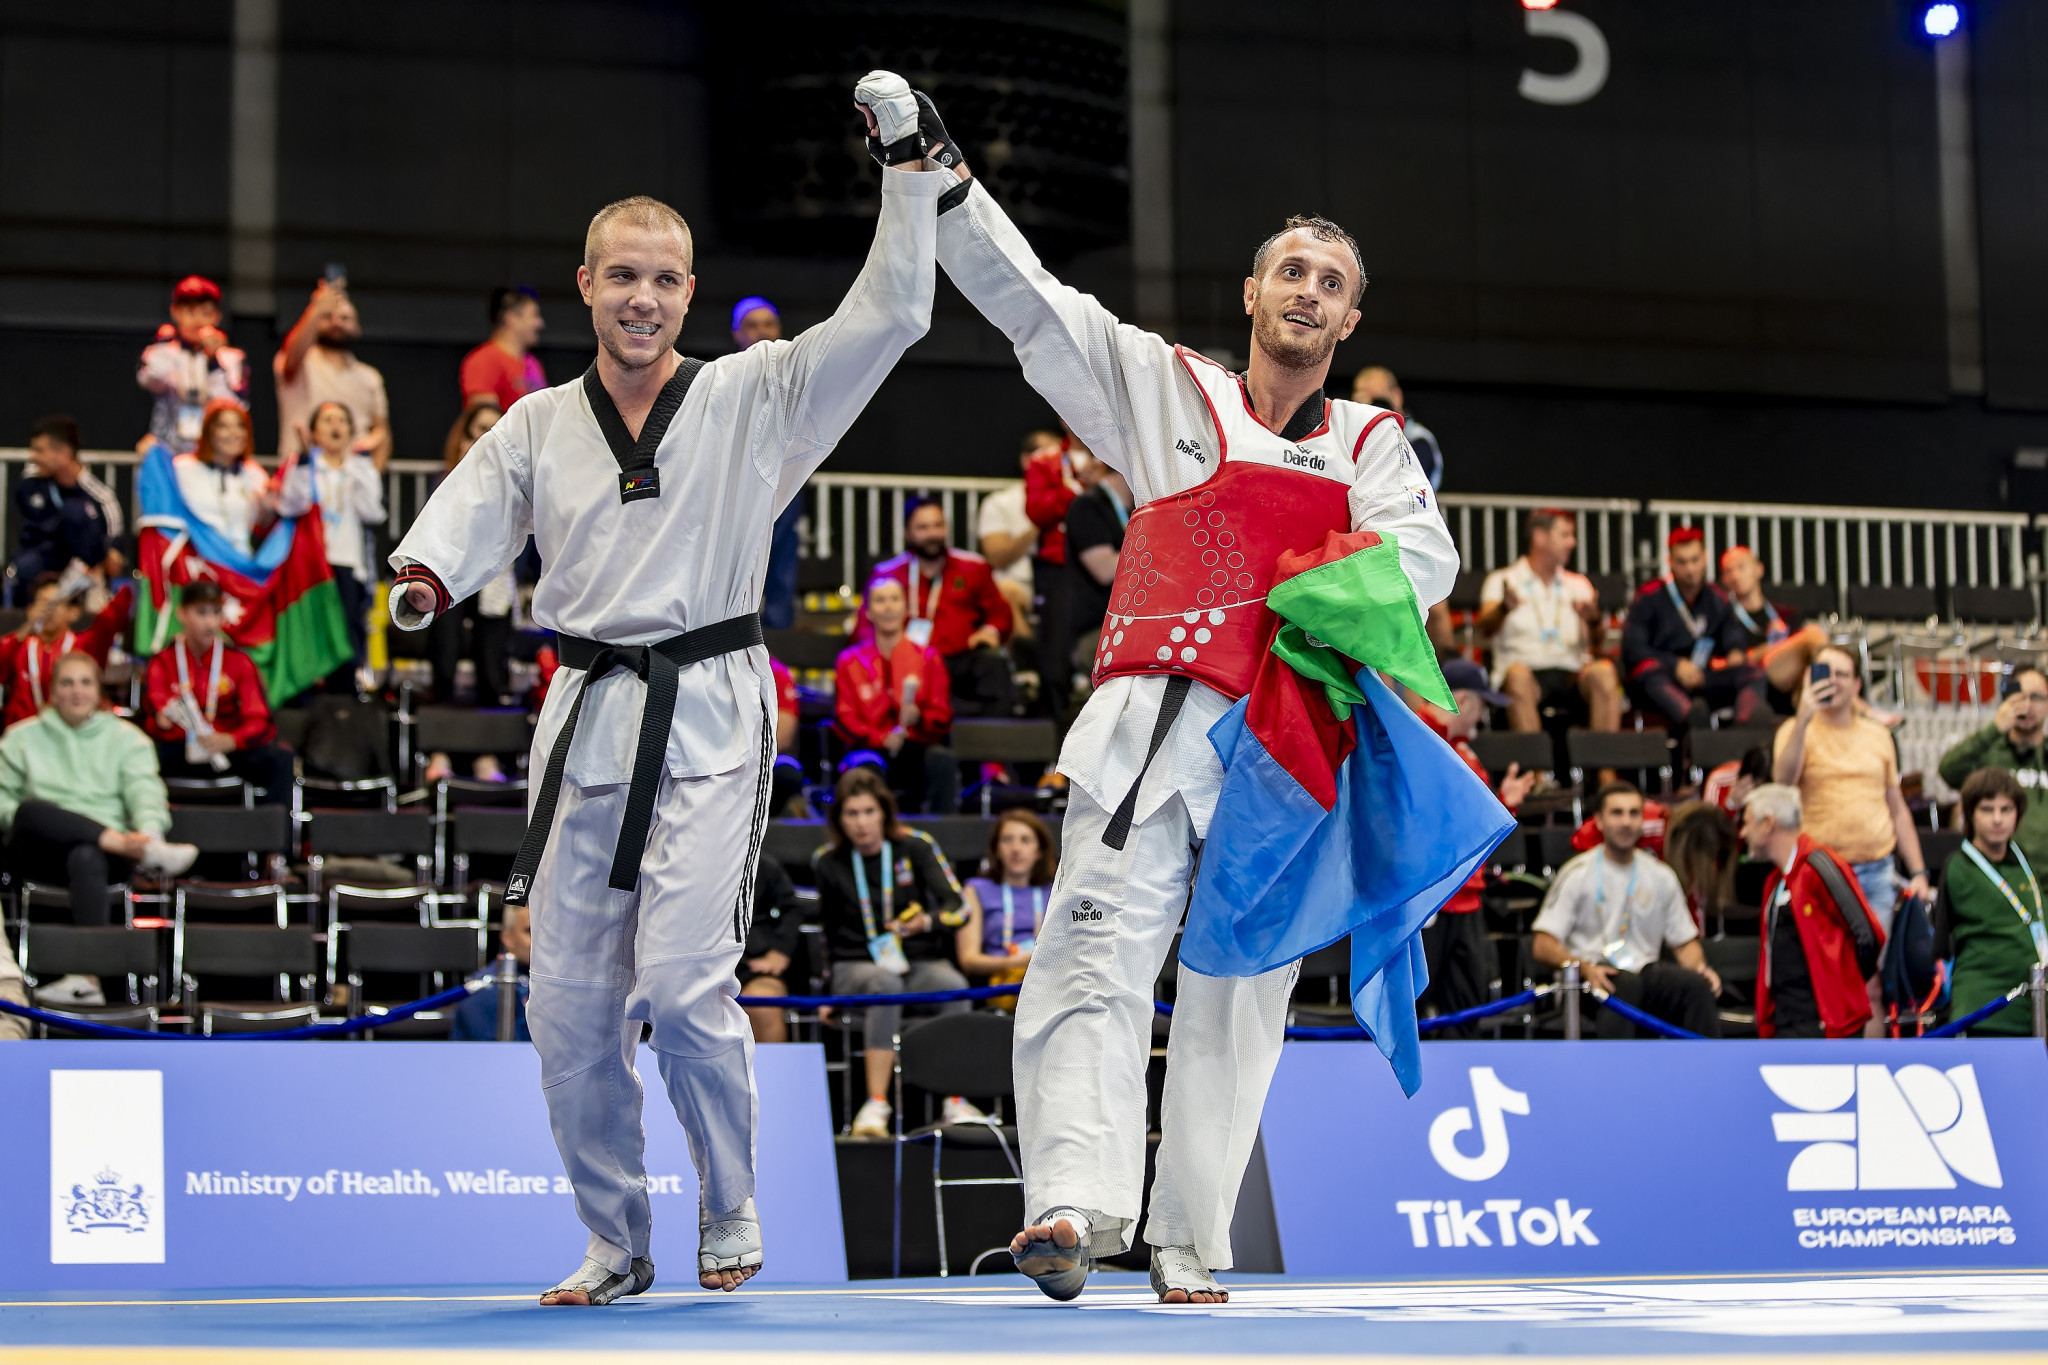 Abuzarli snatches taekwondo gold in thrilling finish at European Para Championships